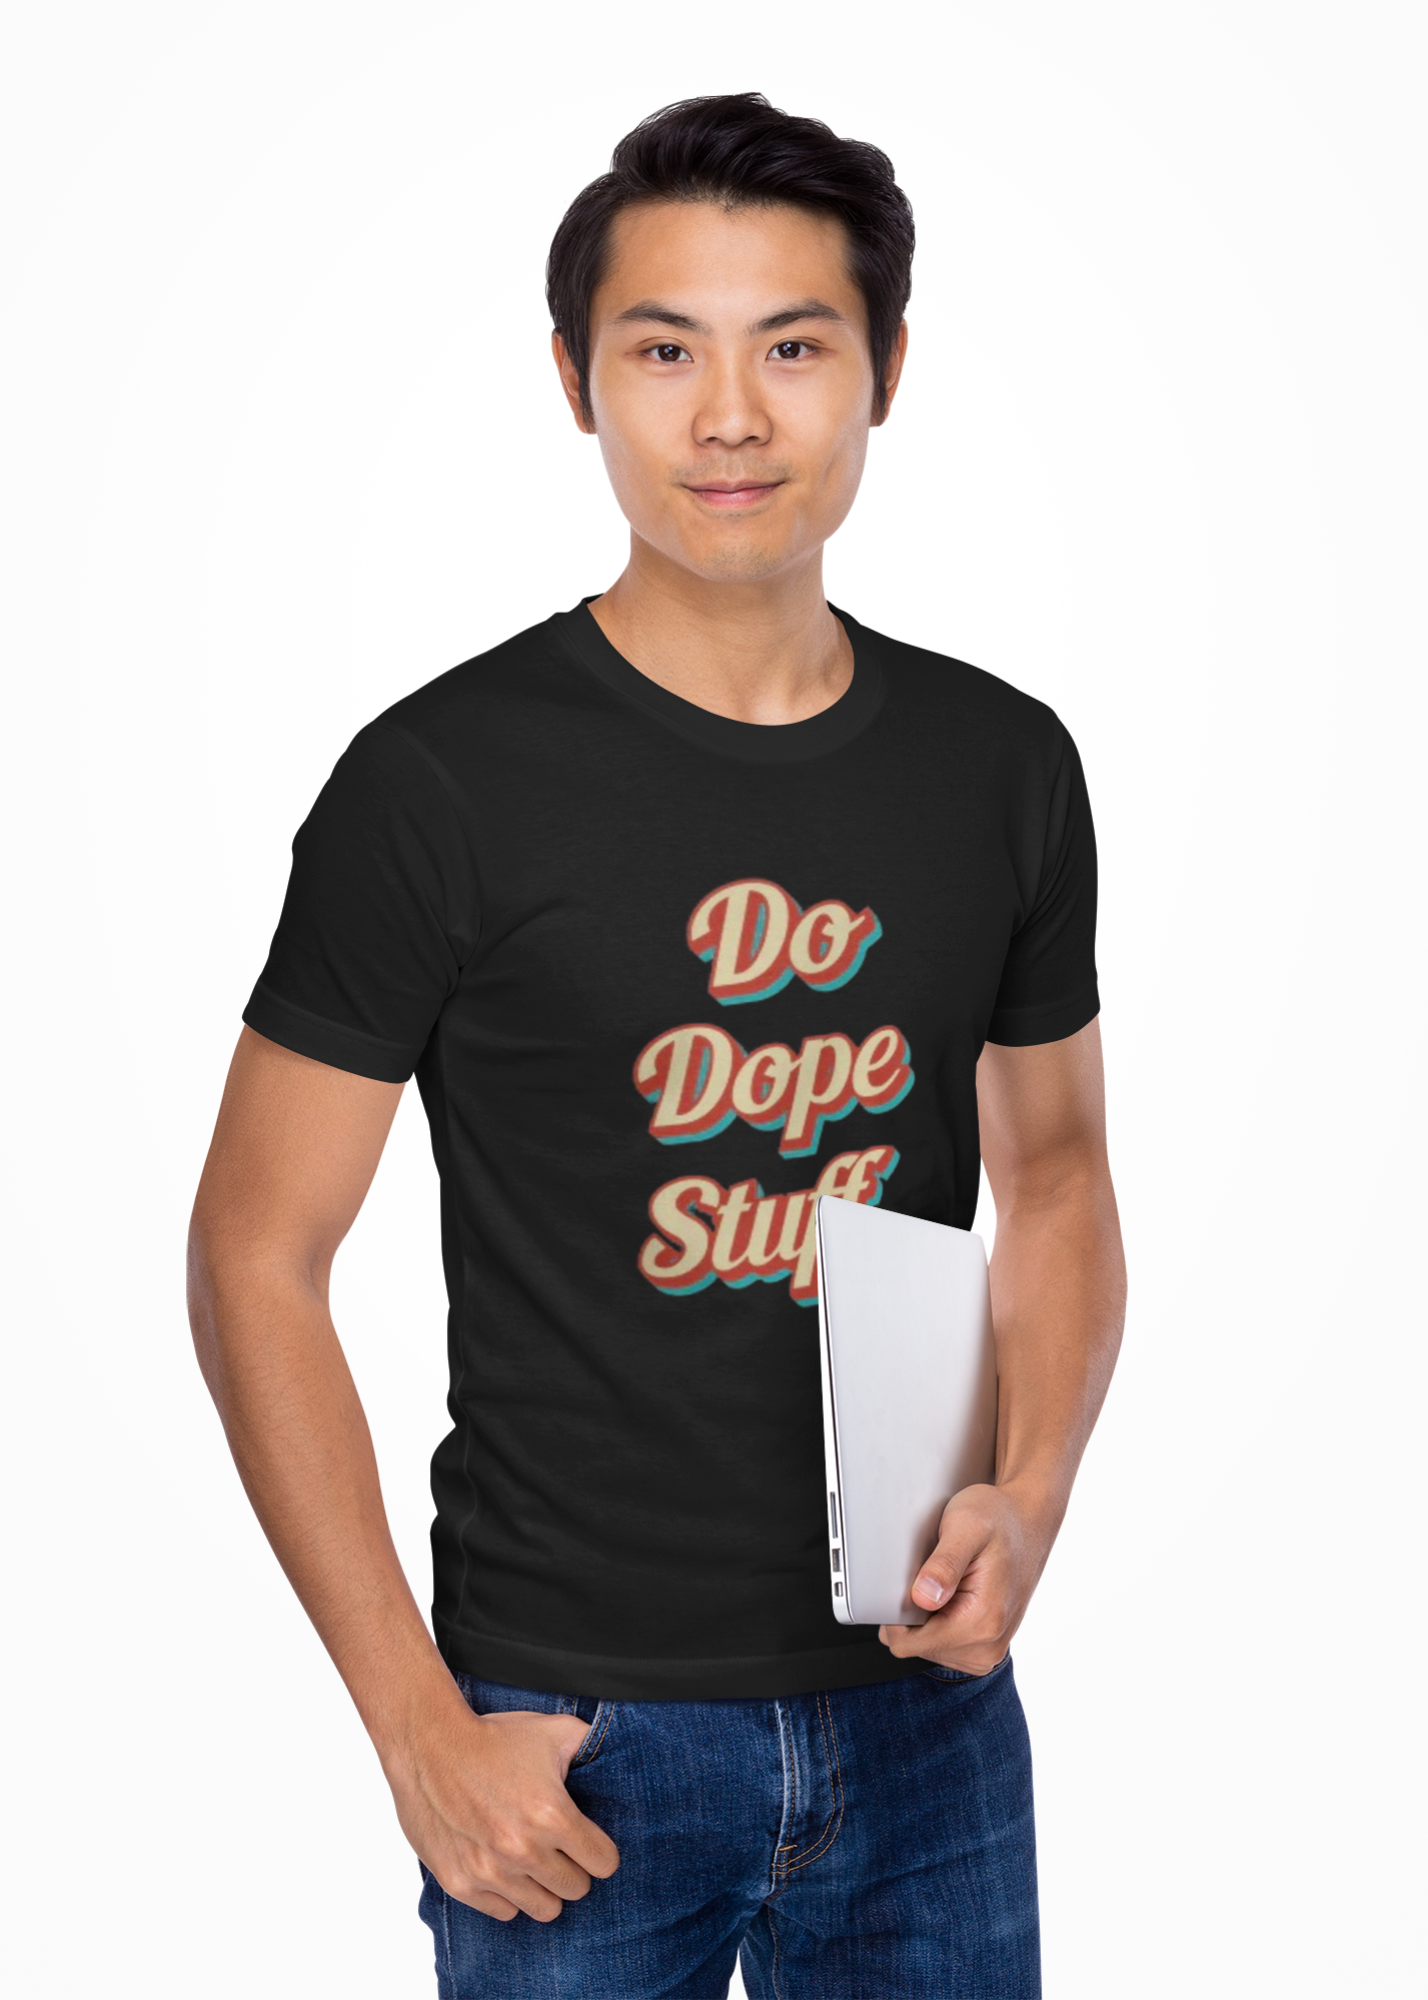 Do Dope Stuff Motivational T-Shirt - Vibe